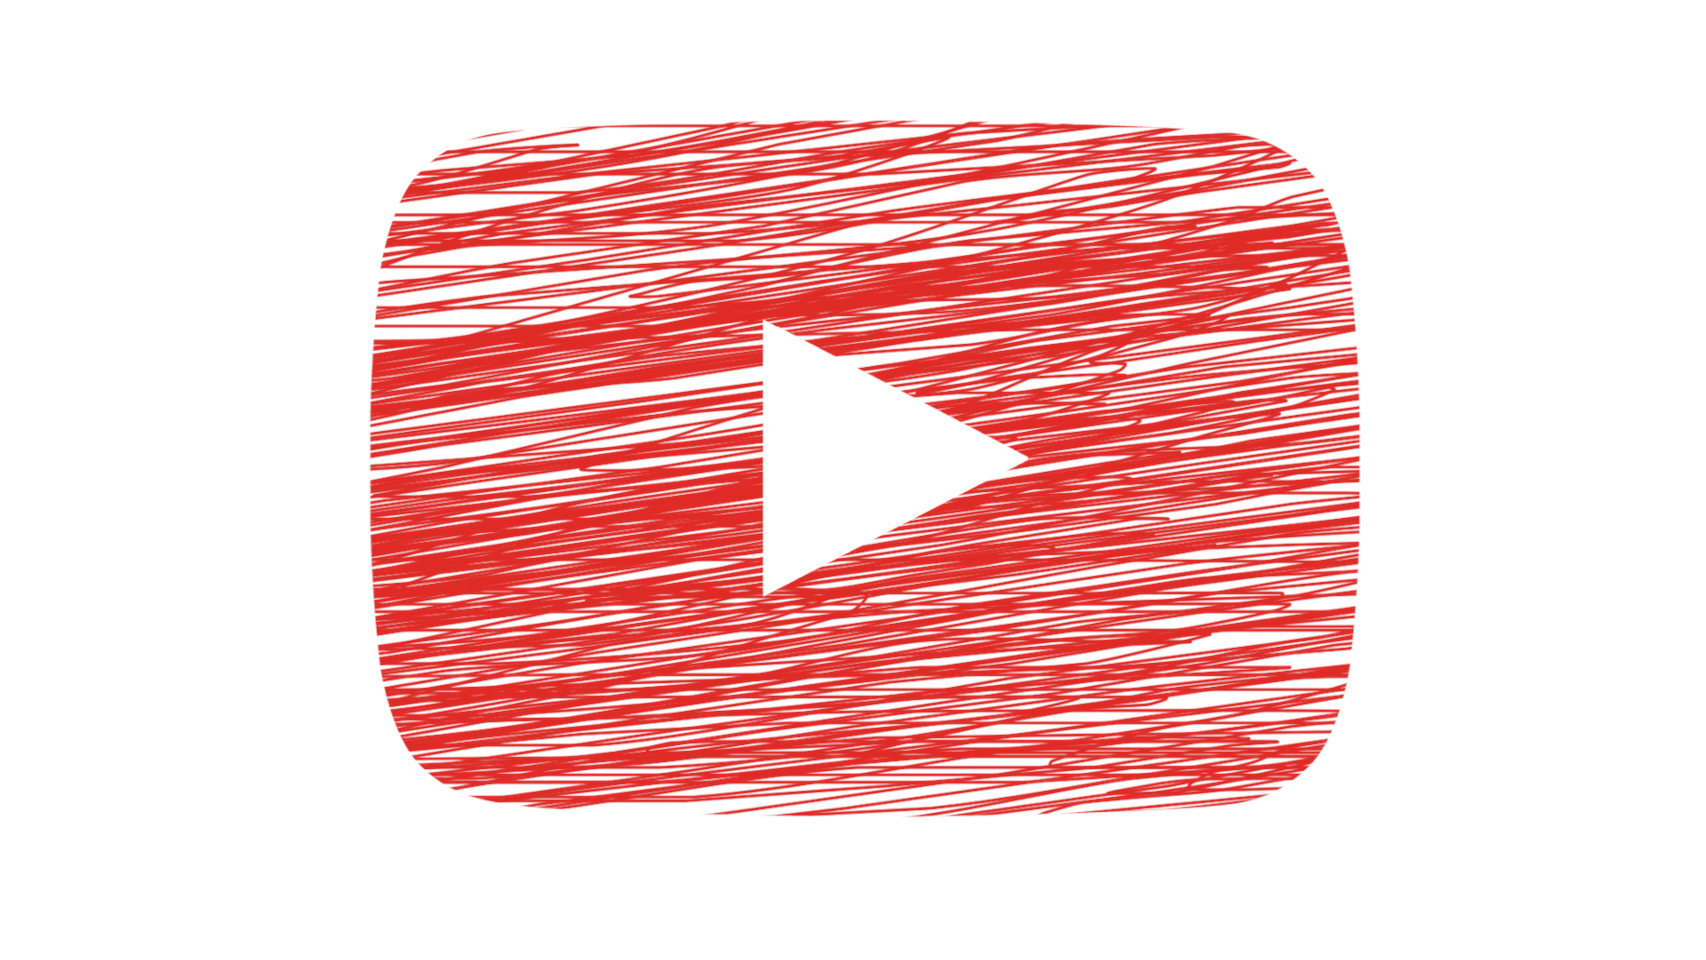 Los youtubers se sindicalizan: quieren enfrentarse a Youtube